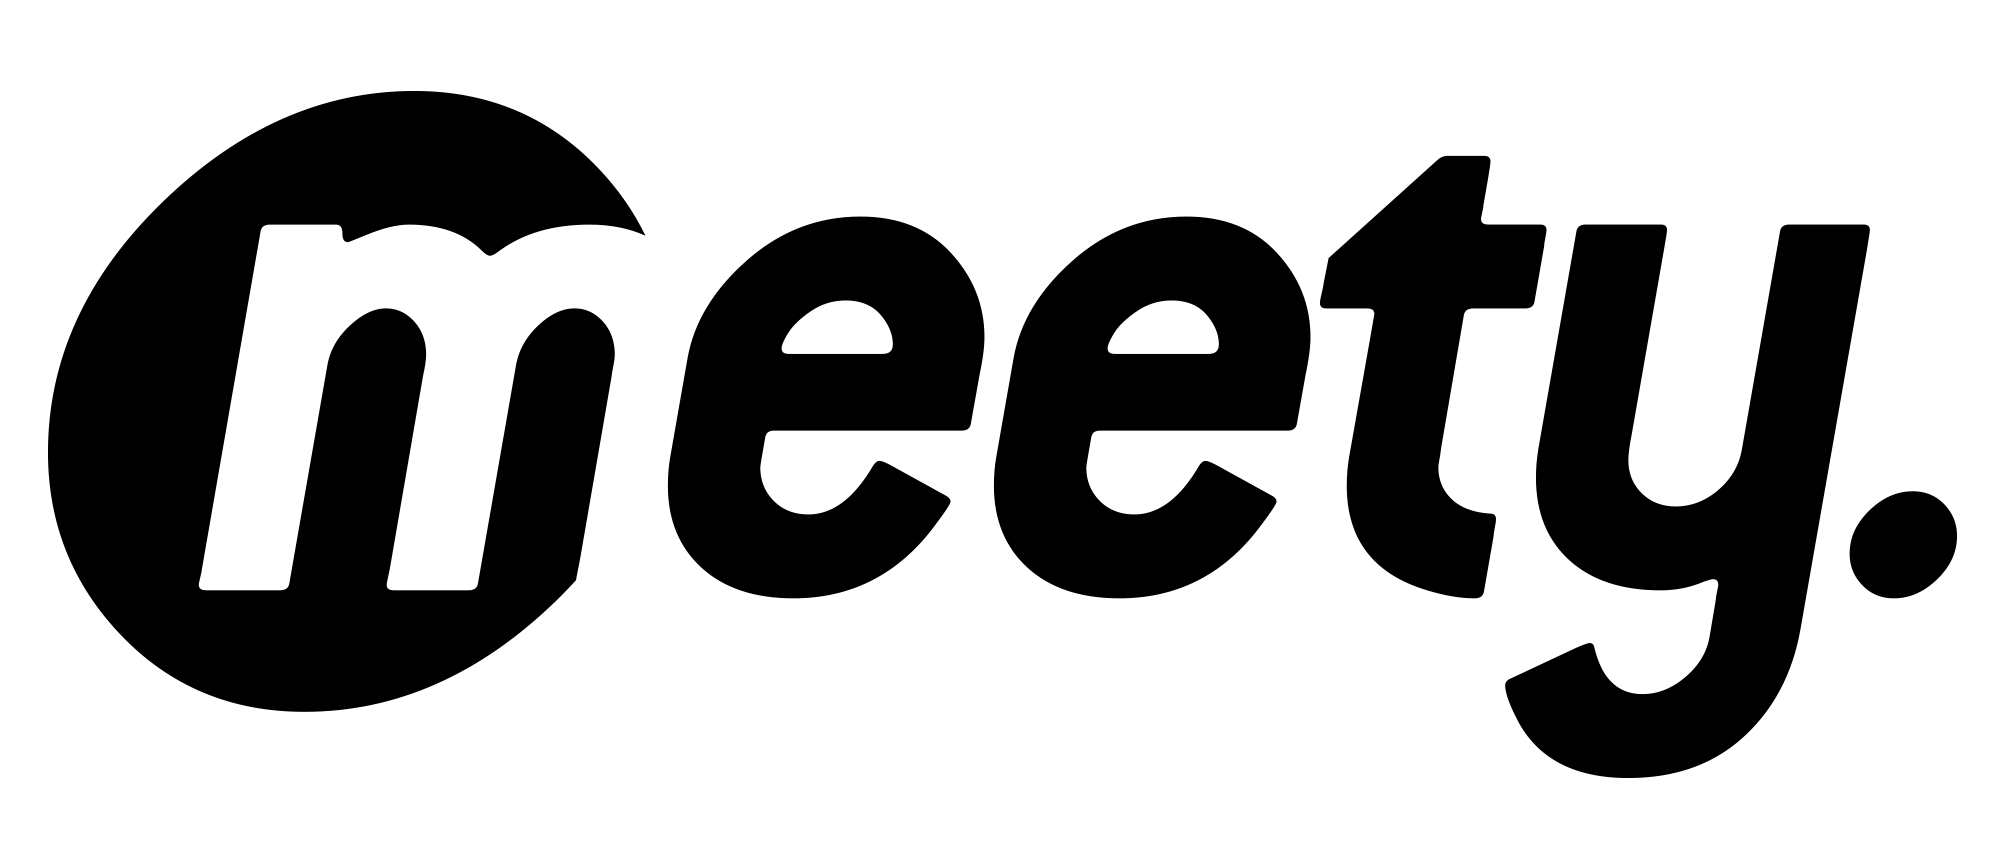 Meety logo black transparent